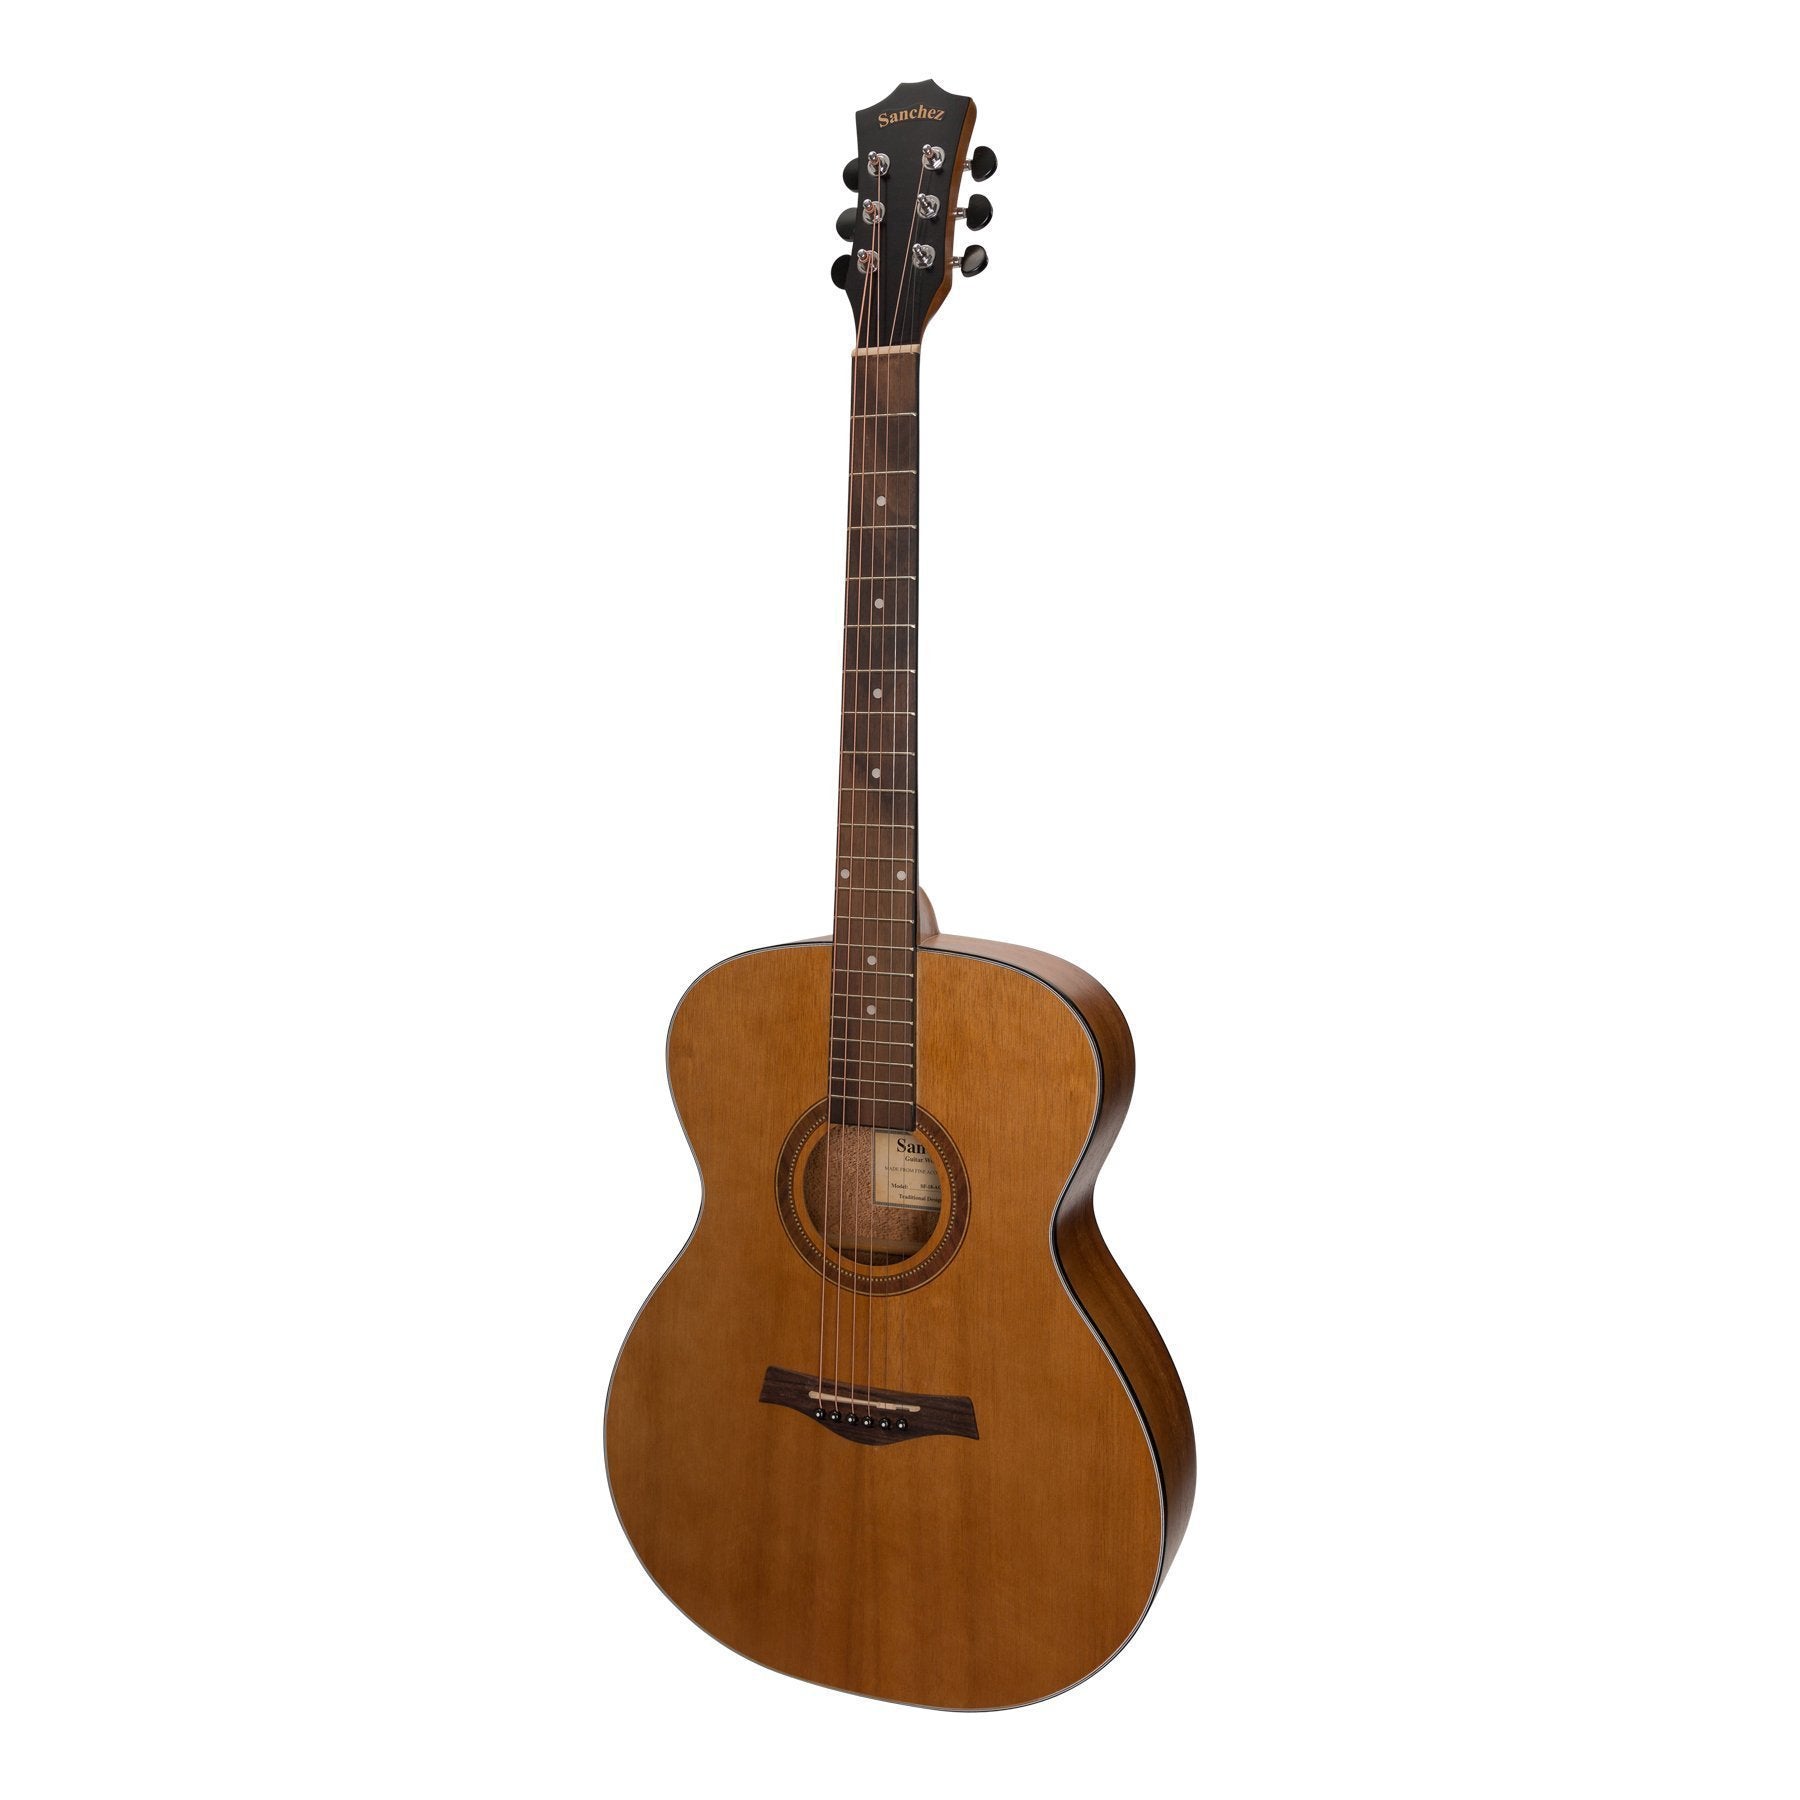 Sanchez Acoustic-Electric Small Body Guitar (Acacia)-SF-18ET-ACA